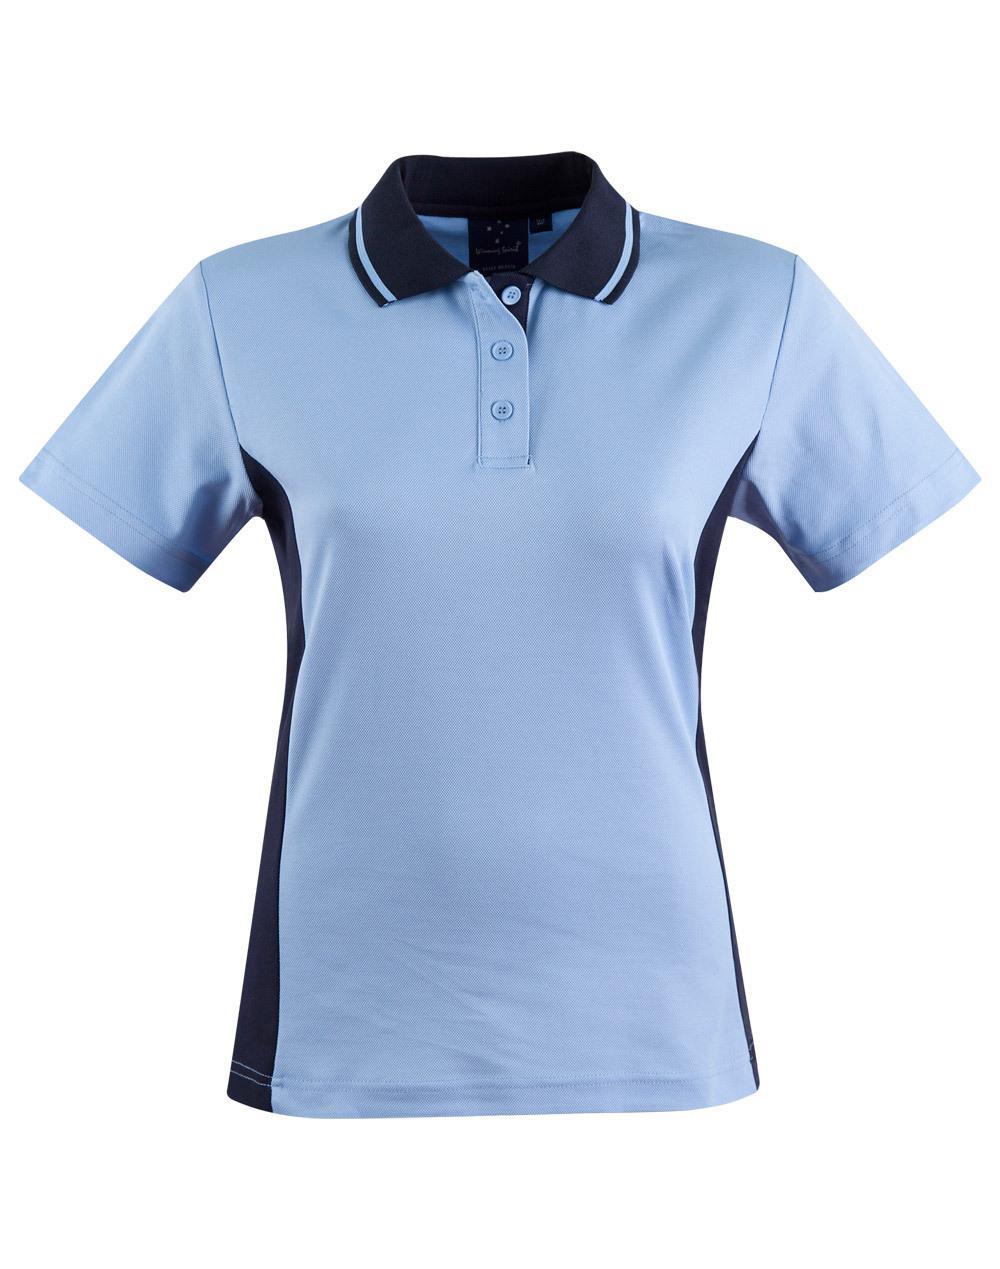 PS74 Sz 08 TEAMMATE Cotton Polyester Ladies Polo Shirt Sky/Navy